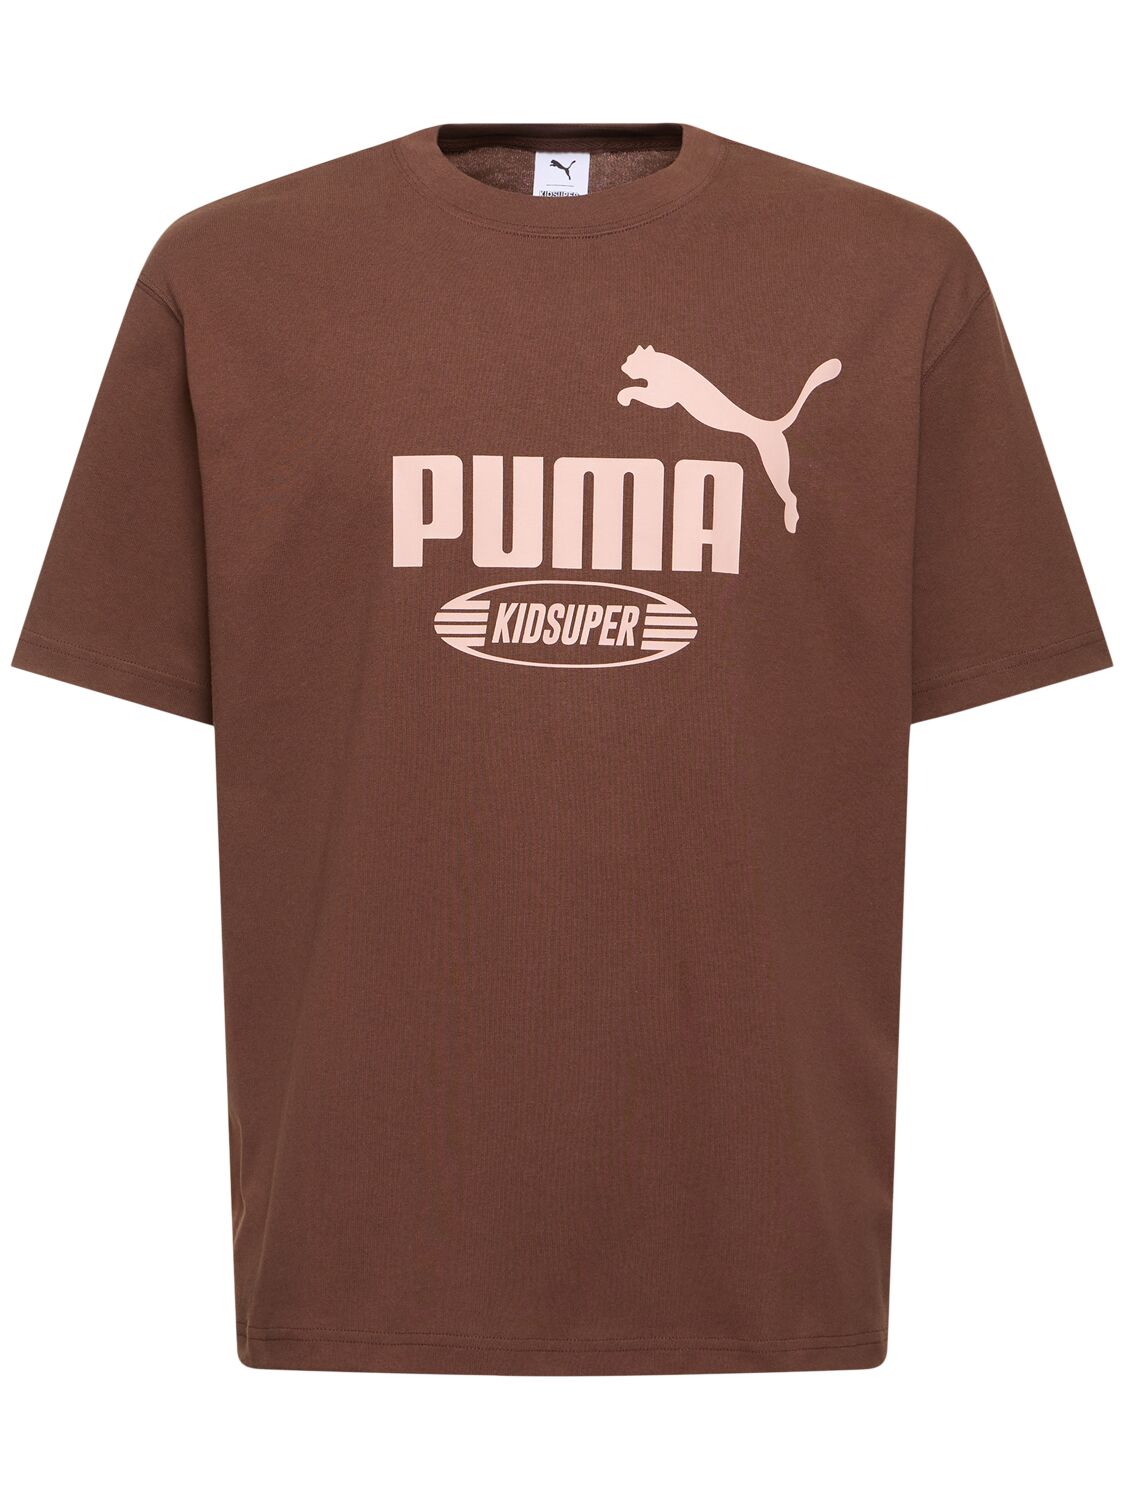 Puma Kidsuper Studios Logo T-shirt In Chestnut Brown